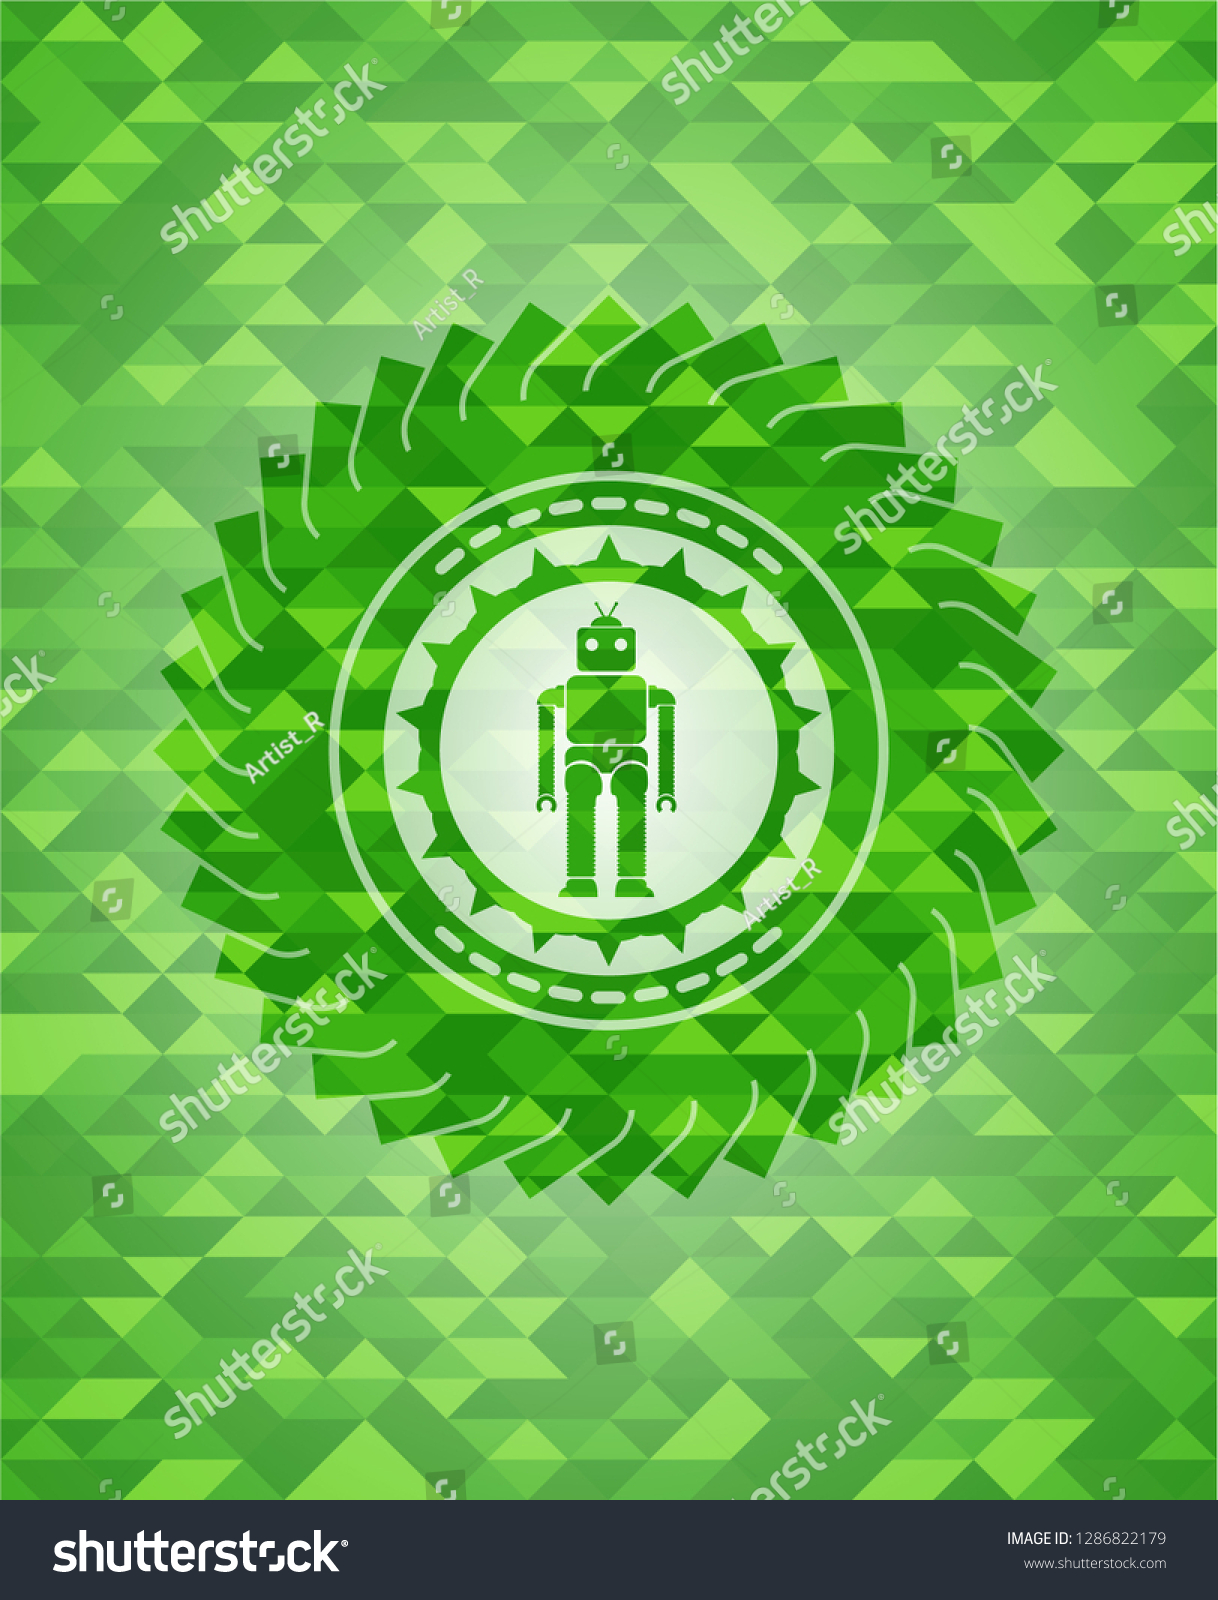 robot icon inside green emblem. Mosaic background #1286822179